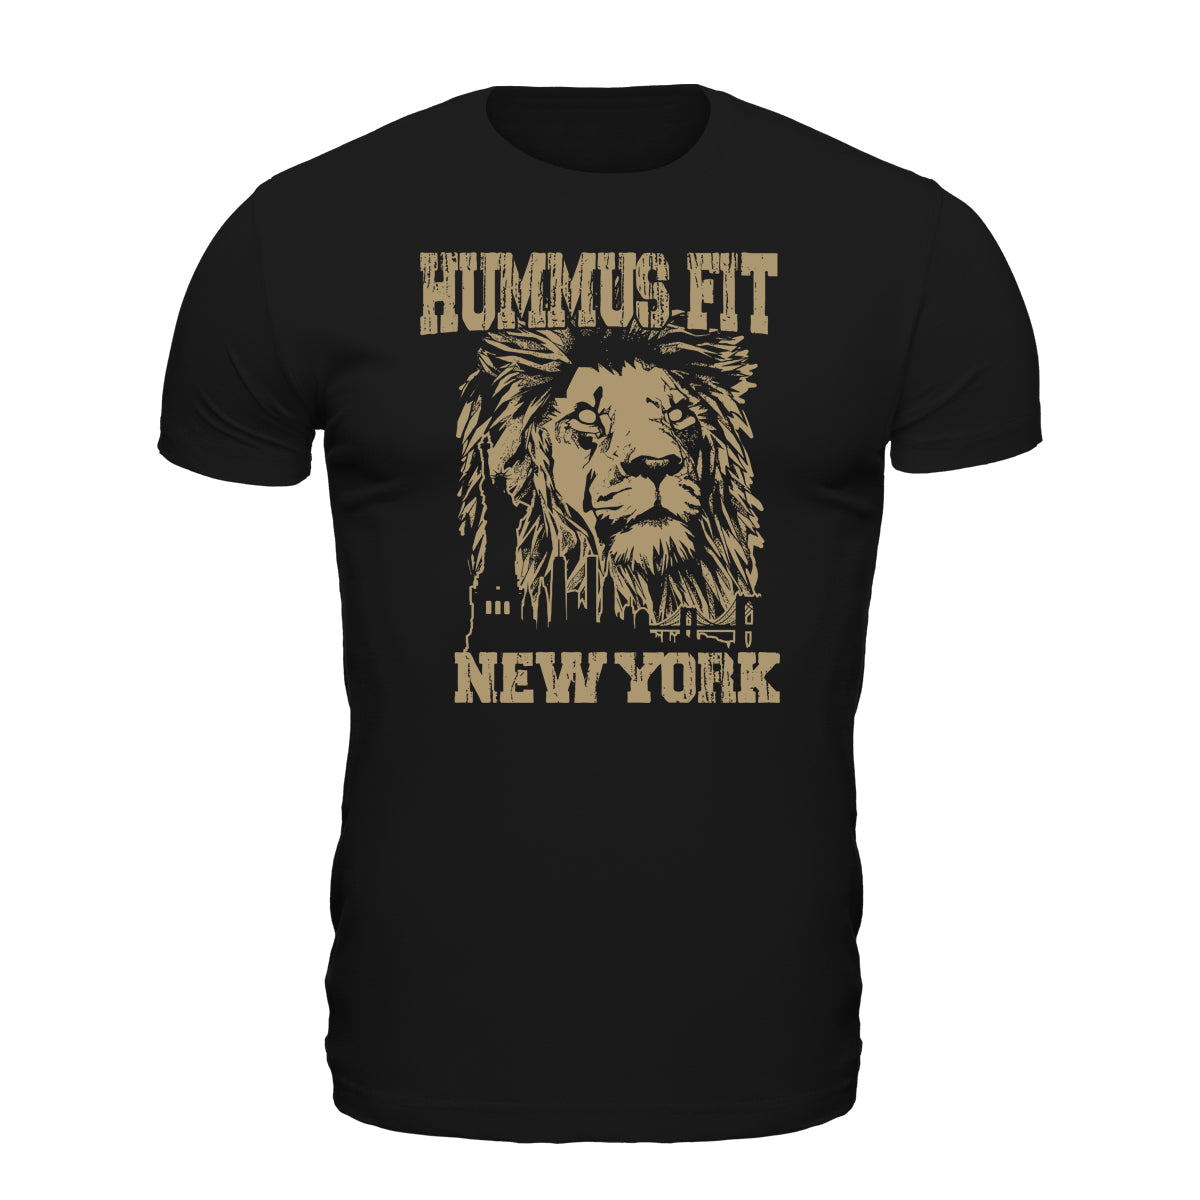 Camiseta unisex Hummus Fit New York negra